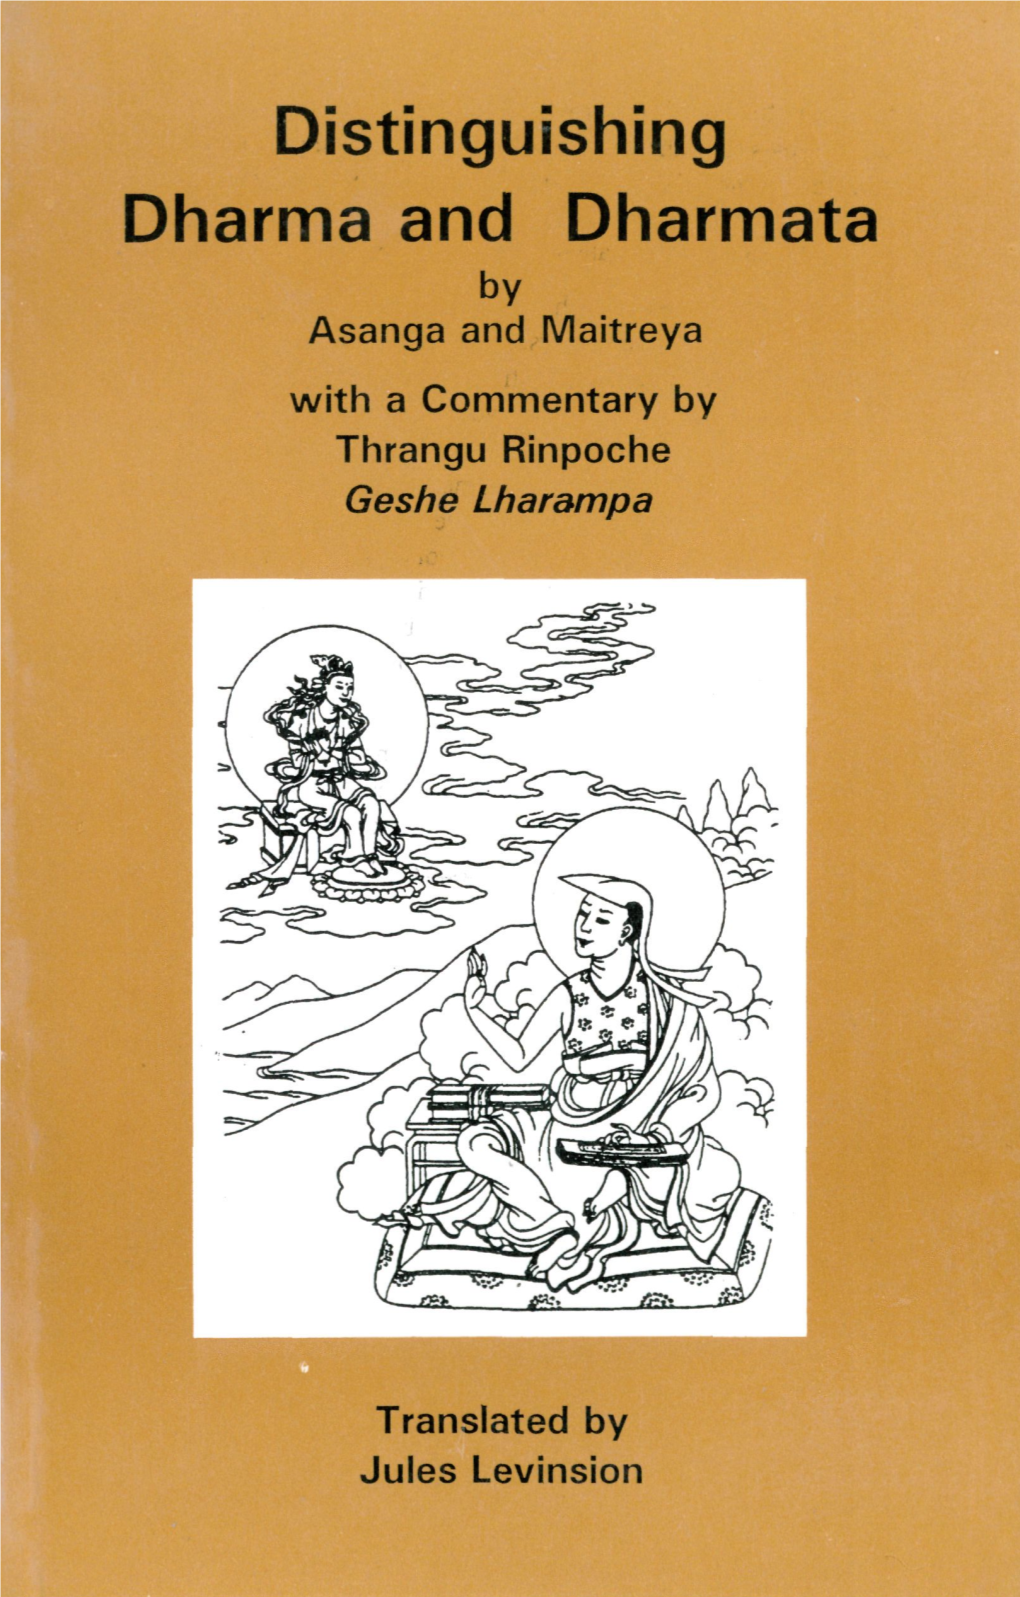 Distinguishing Dharma and Dharmata by Asanga and Maitreya with a Commentary by Thrangu Rinpoche Geshe Lharampa